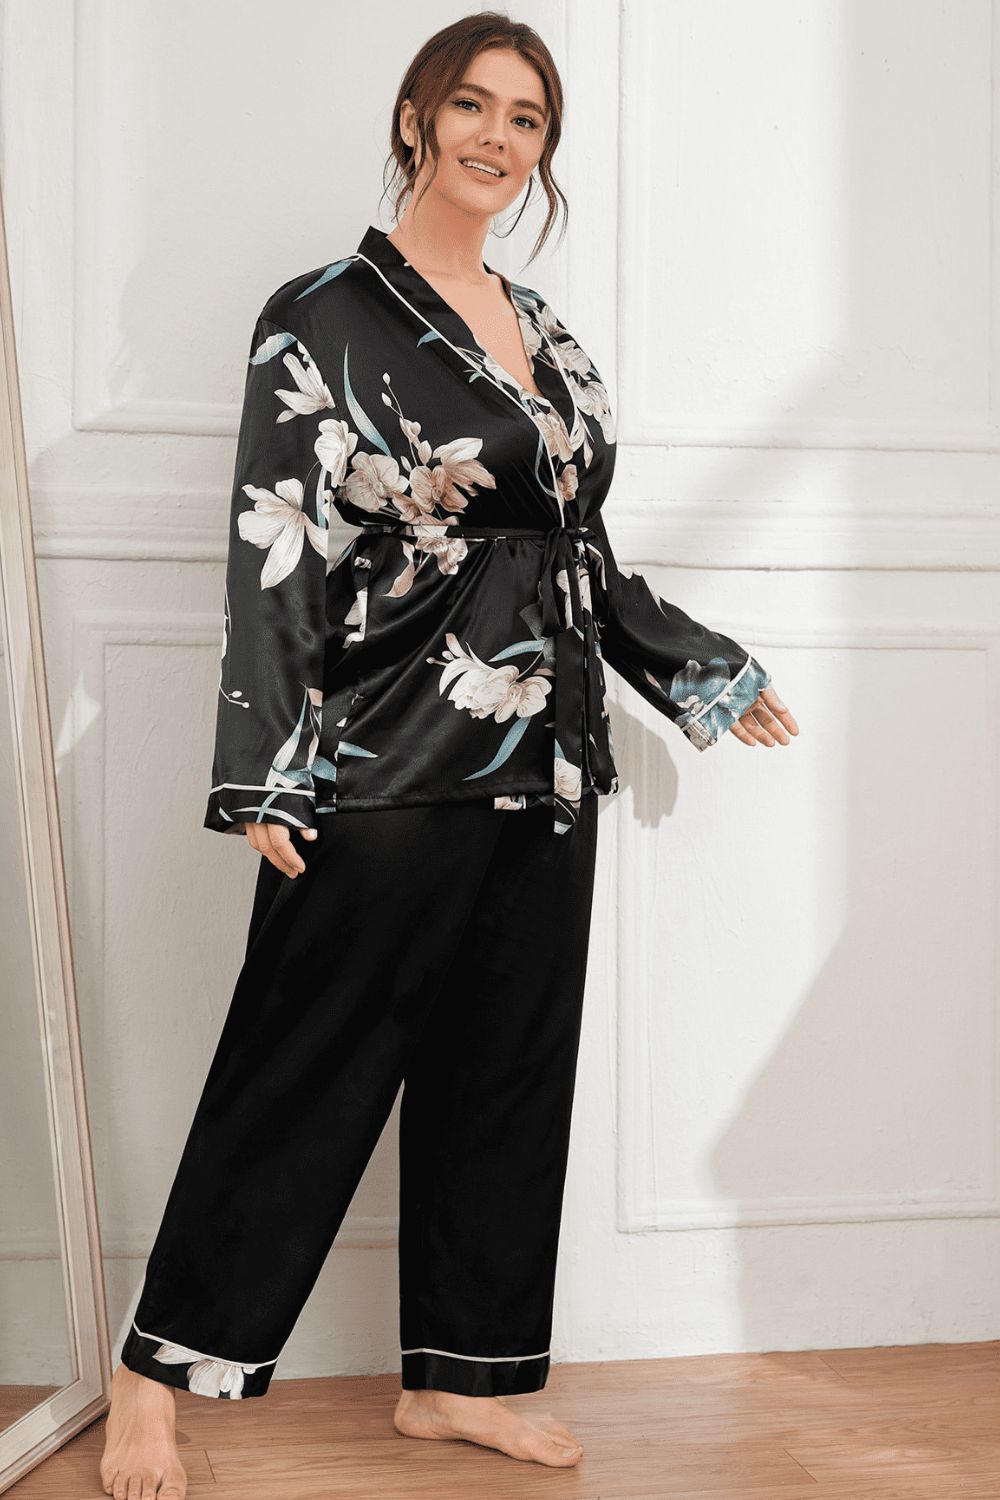 Model wearing black plus size pajama set with floral print